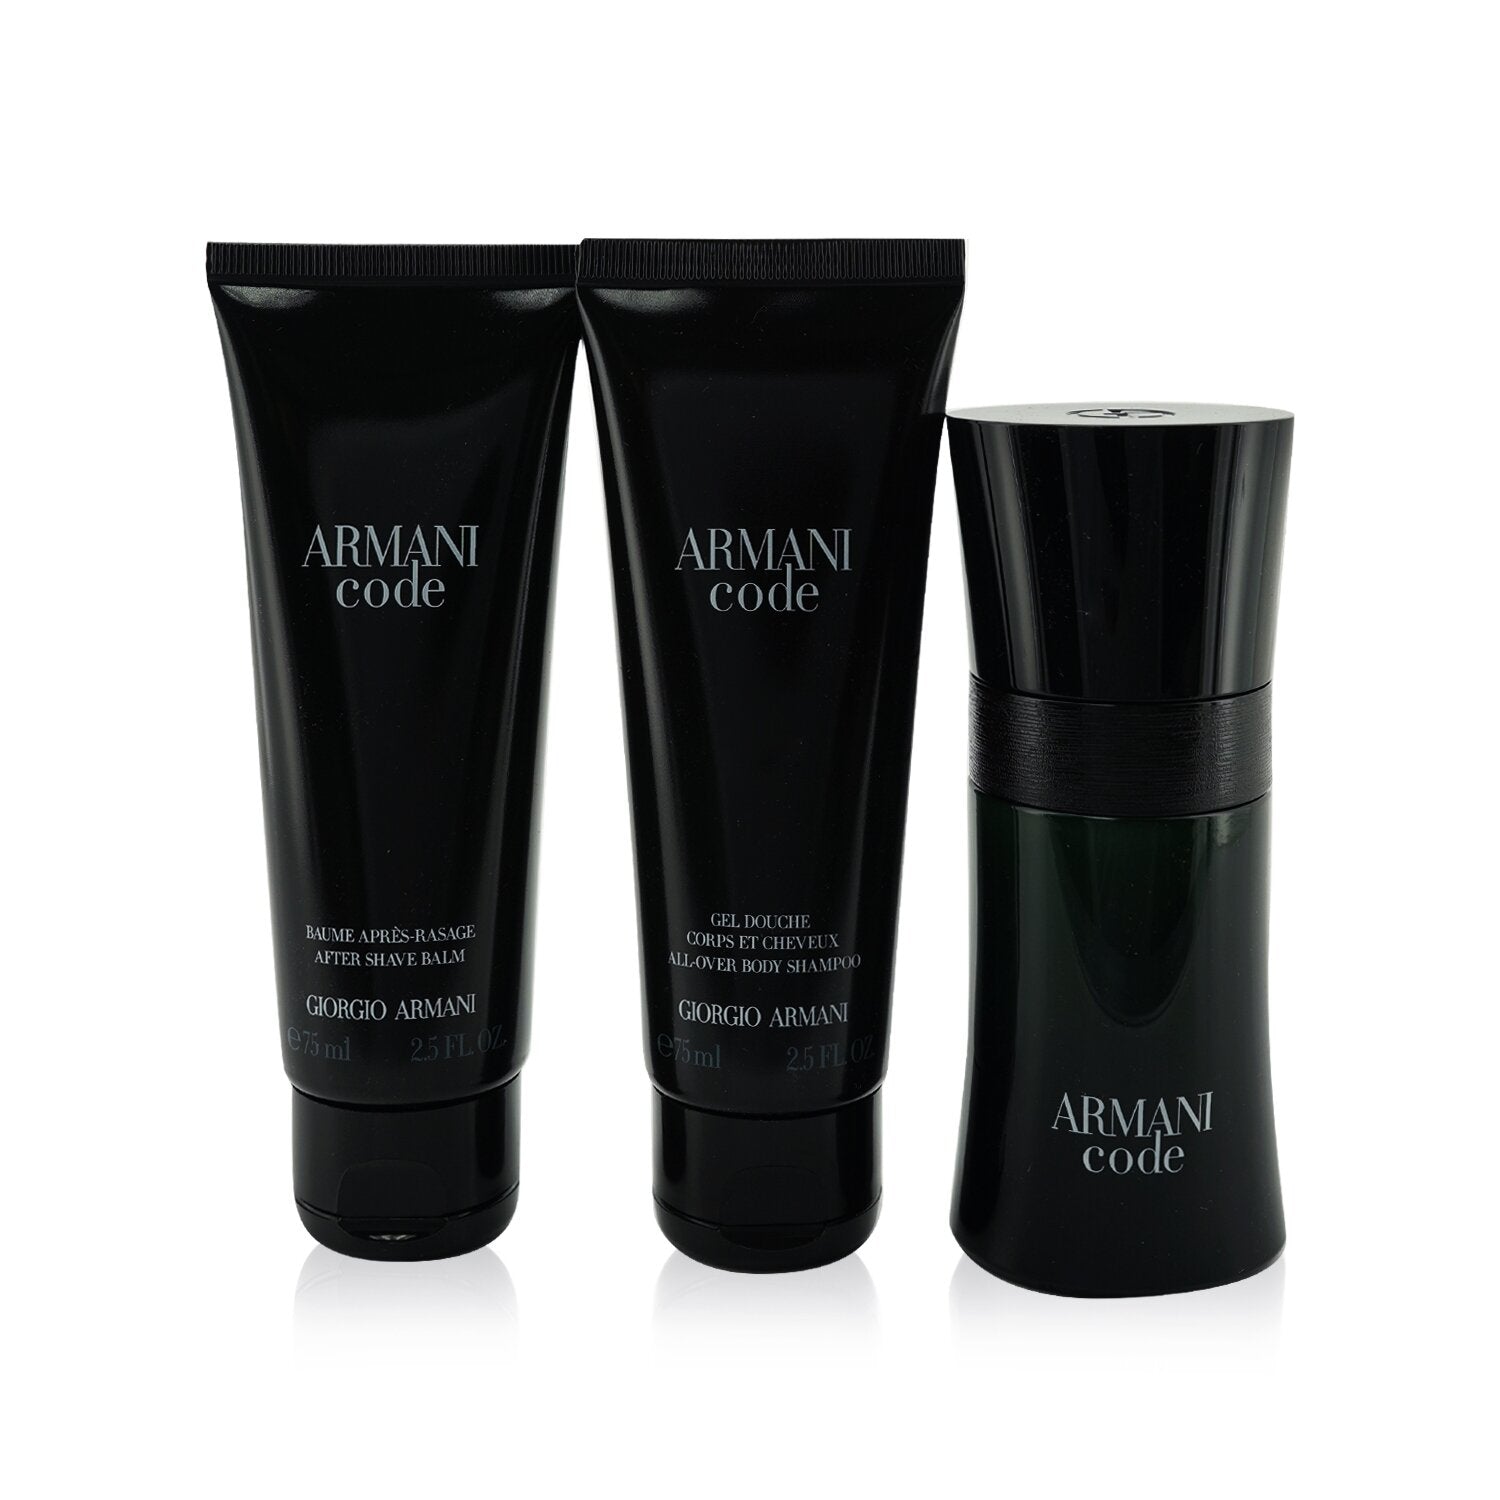 Armani Code Eau De Toilette Spray 50ml/1.7oz + All Over Body Shampoo + After Shave Balm 75ml/2.5oz for Sale | Giorgio Armani, Men's Fragrance, Buy Now – Author